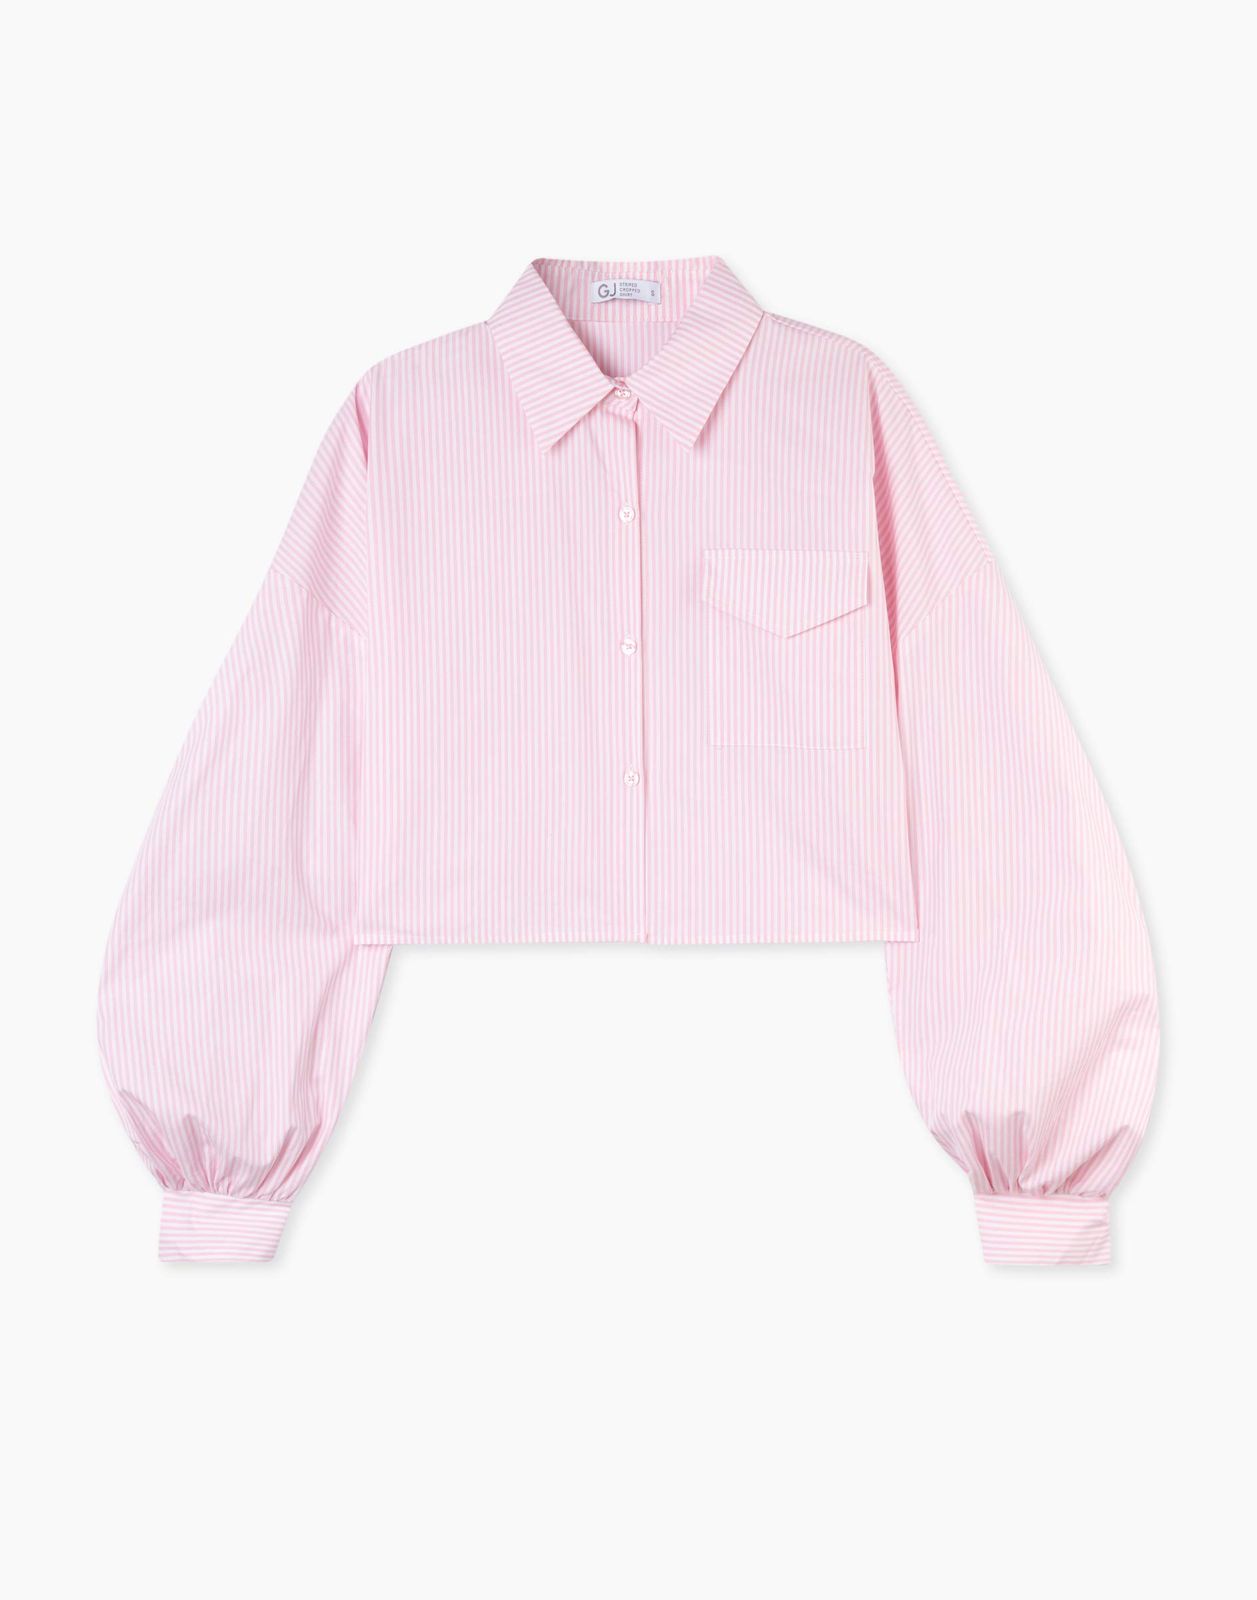 Рубашка женская Gloria Jeans GWT003971 белый/розовый M/170